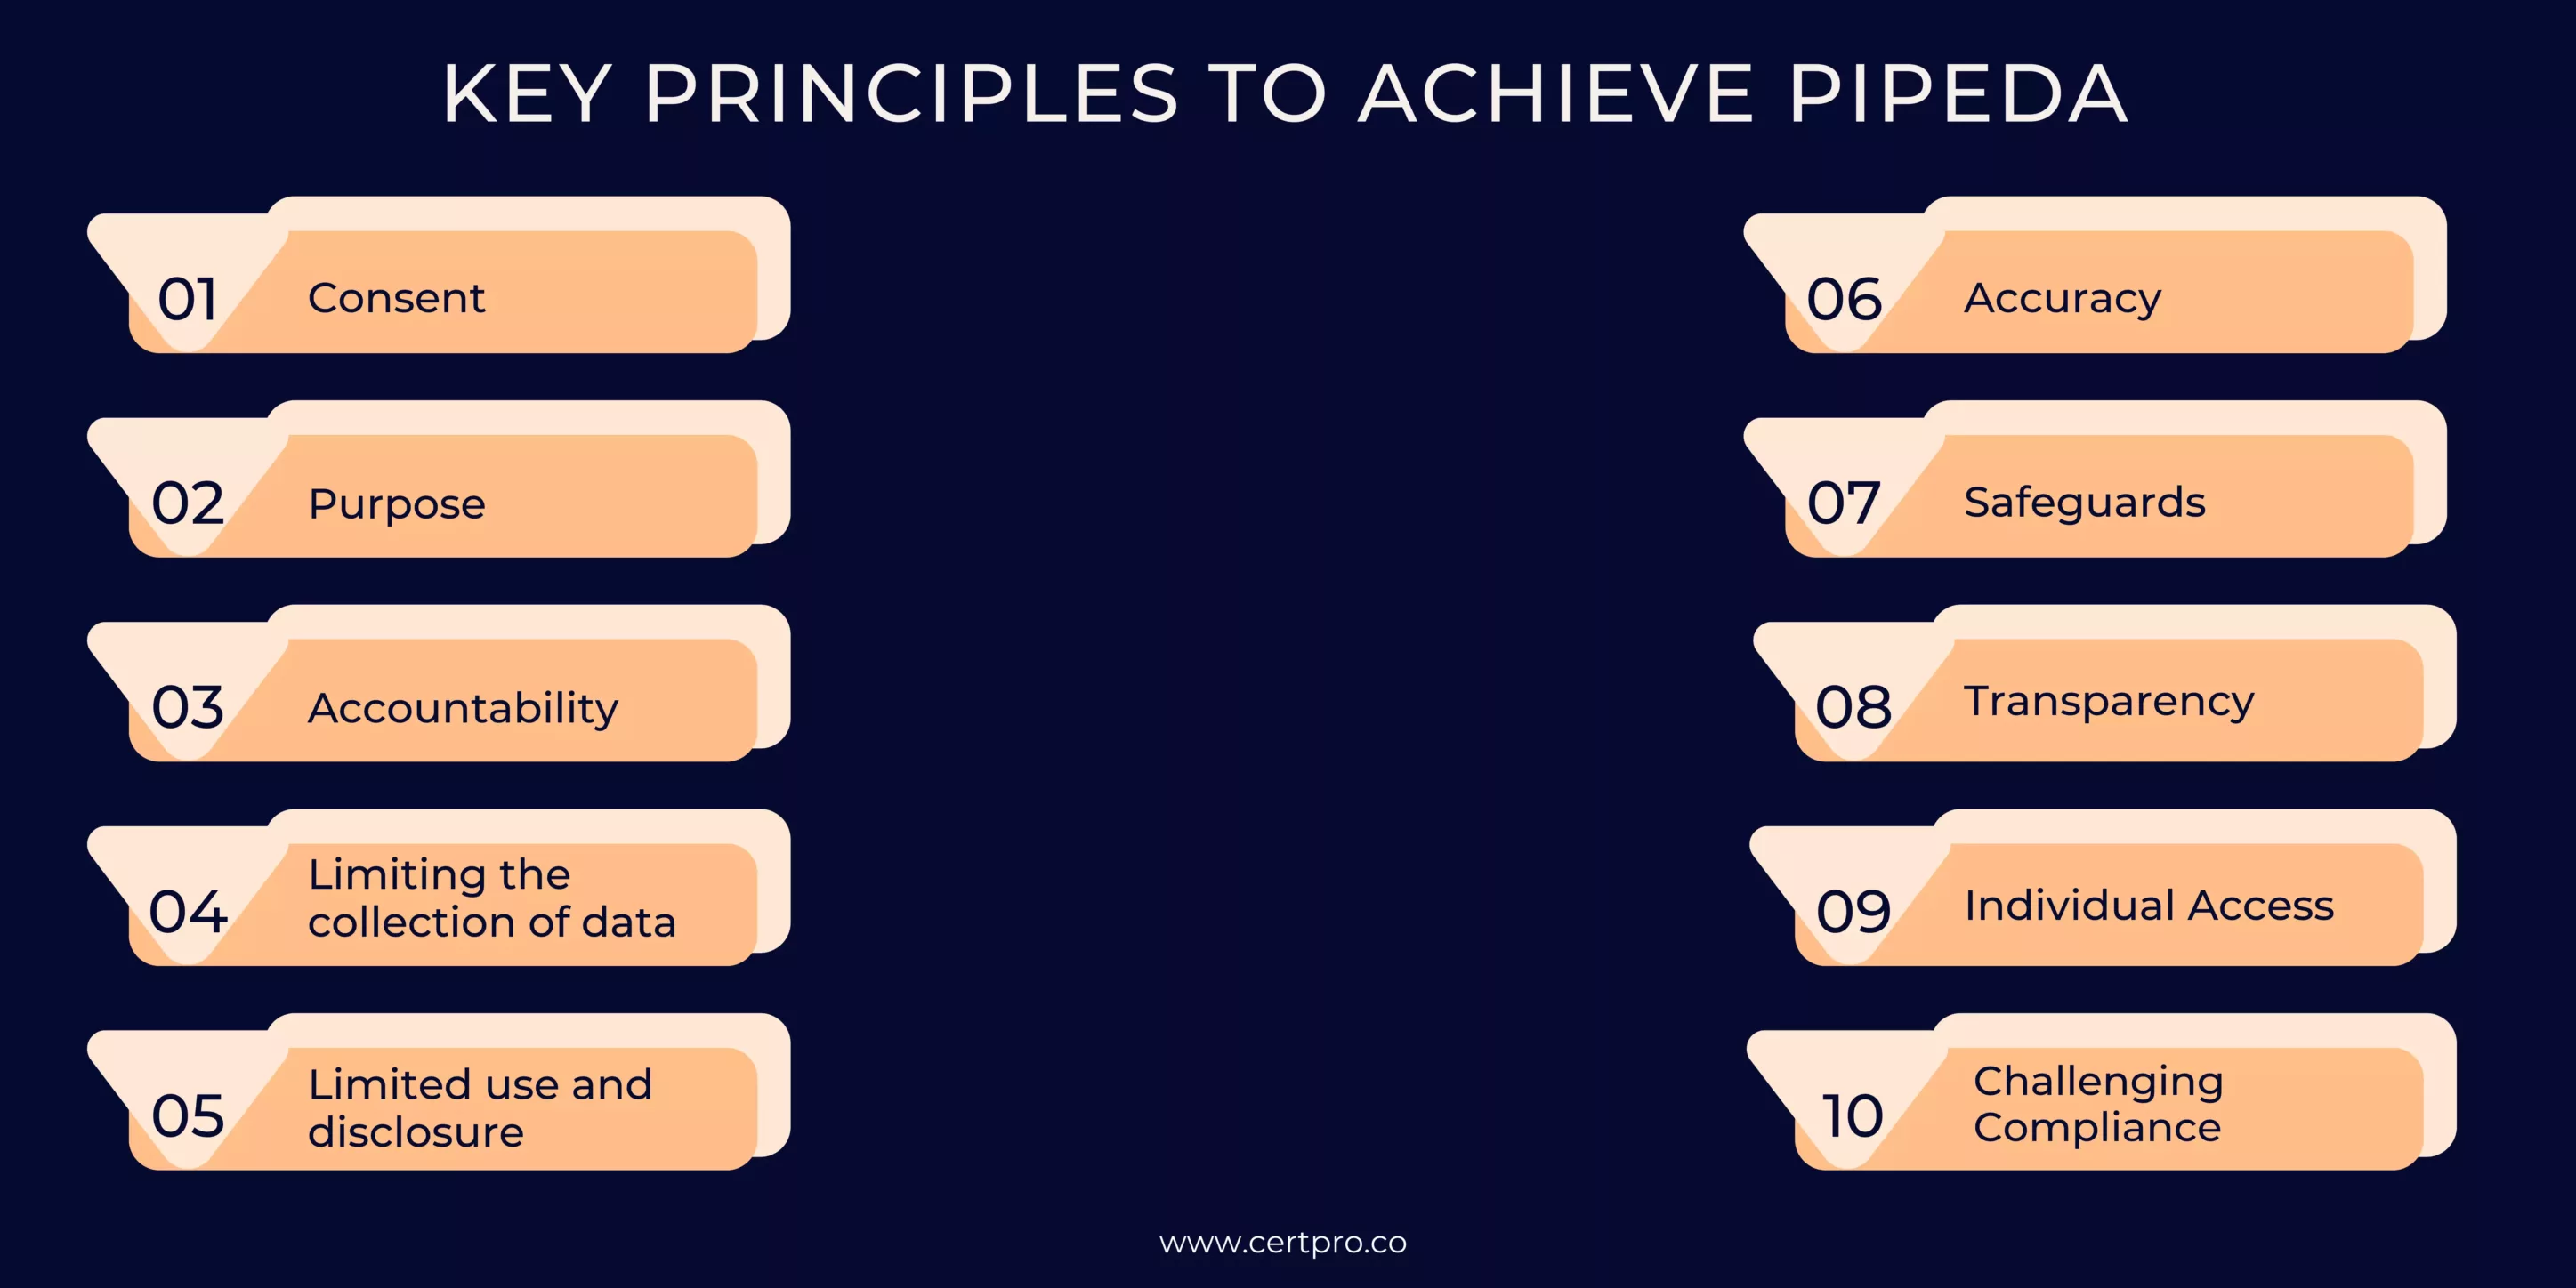 KEY PRINCIPLES TO ACHIEVE PIPEDA